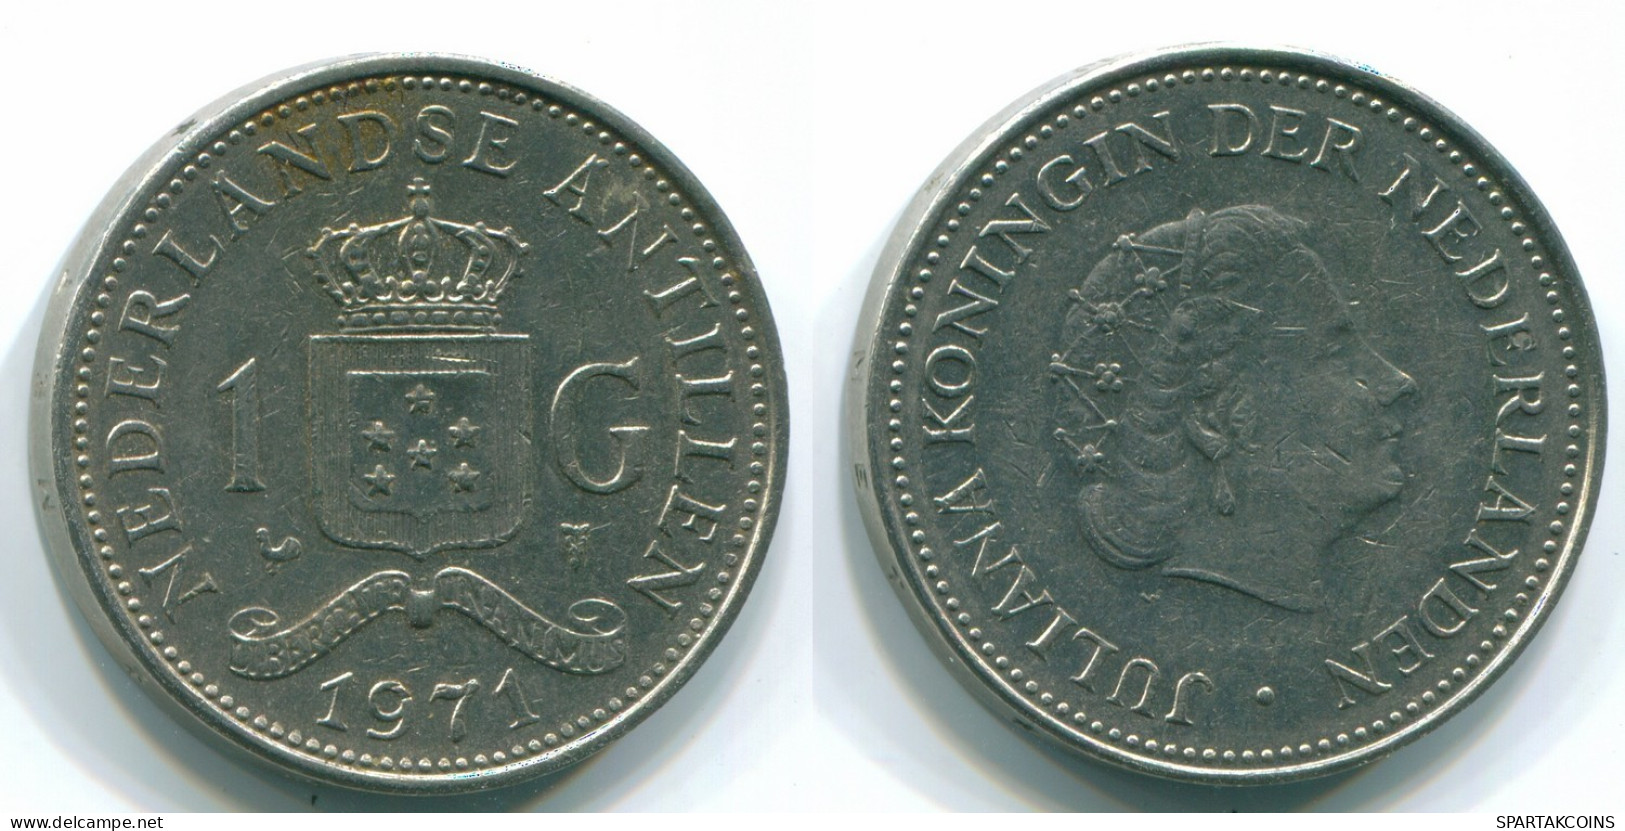 1 GULDEN 1971 NETHERLANDS ANTILLES Nickel Colonial Coin #S12012.U.A - Netherlands Antilles